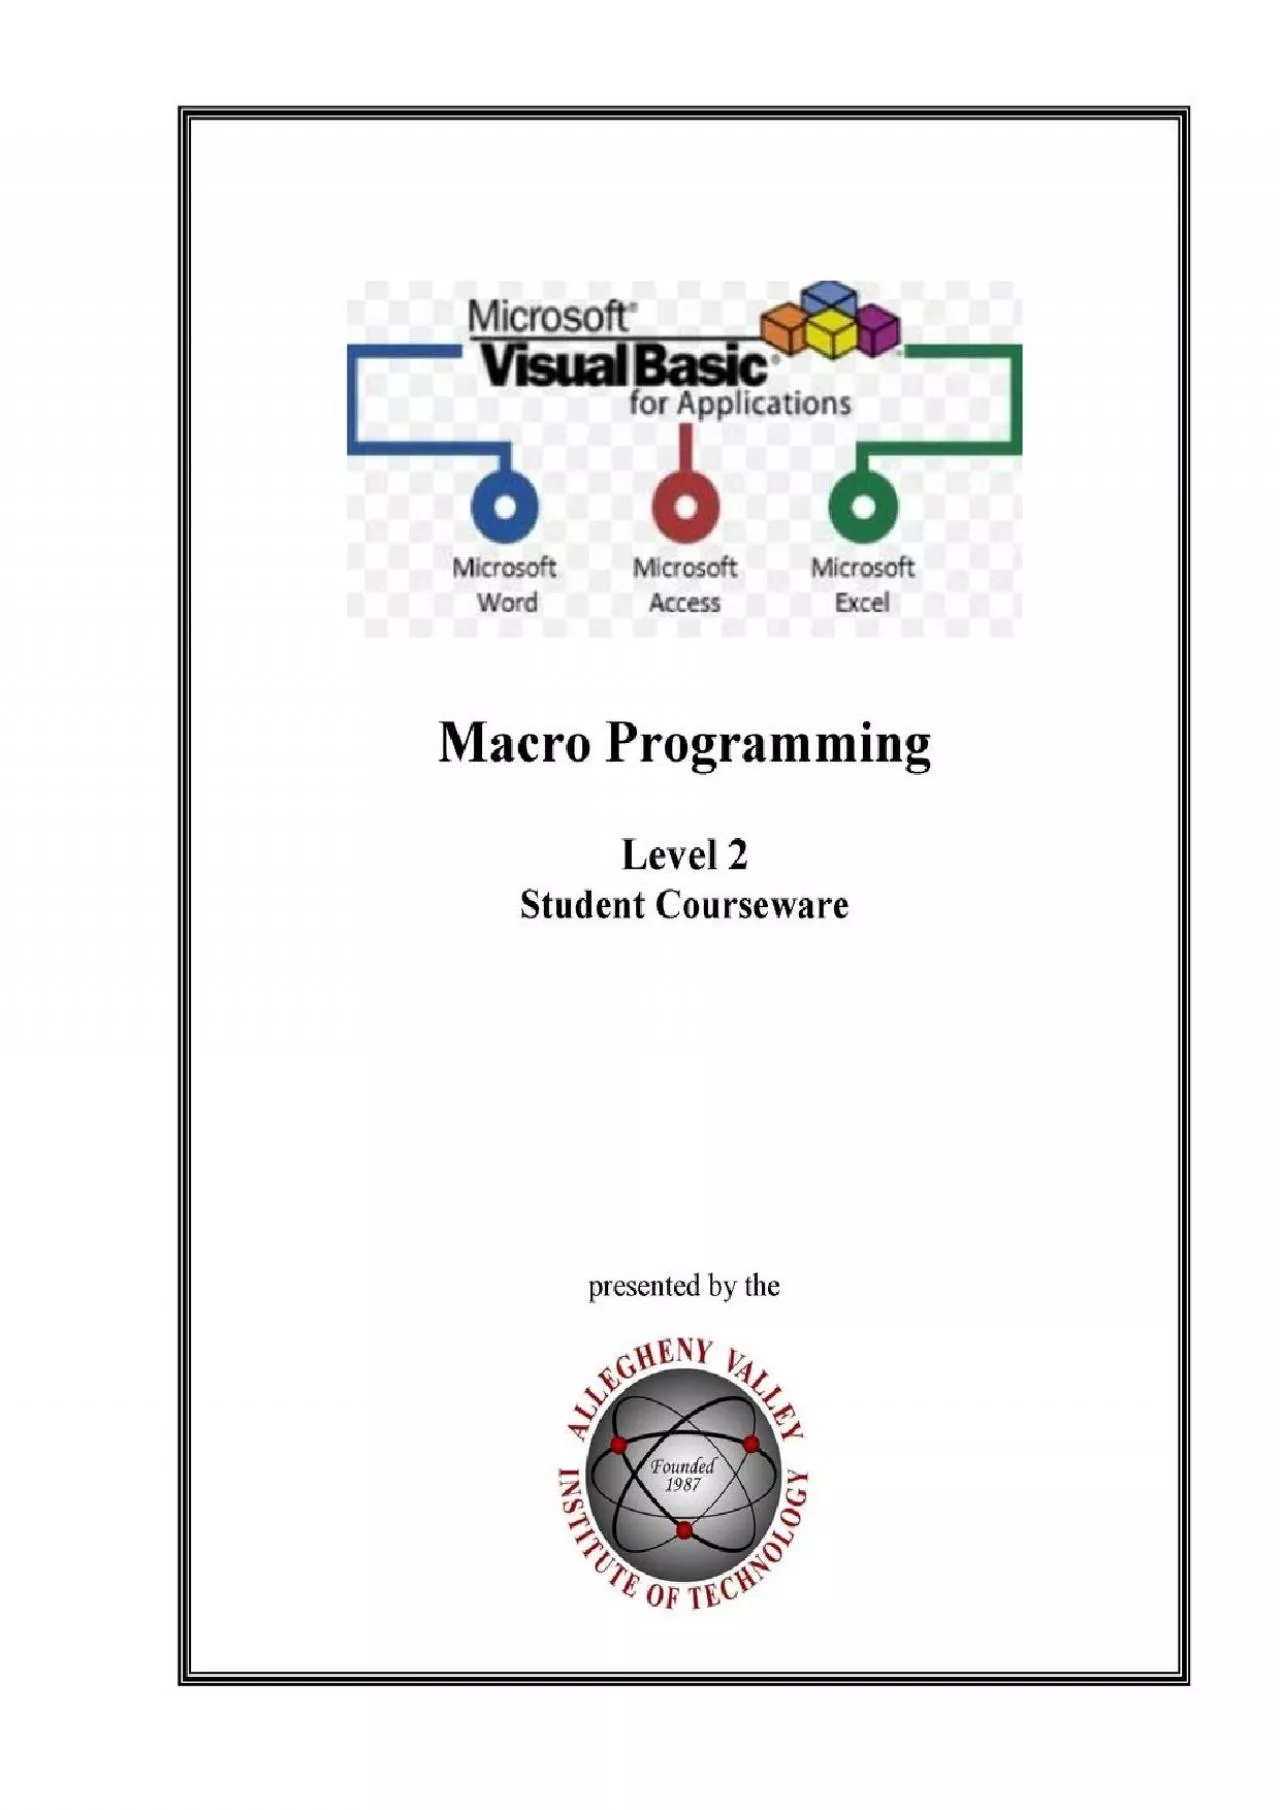 (DOWNLOAD)-Visual Basic for Applications (VBA) Level 2: Macro Programming Student Courseware